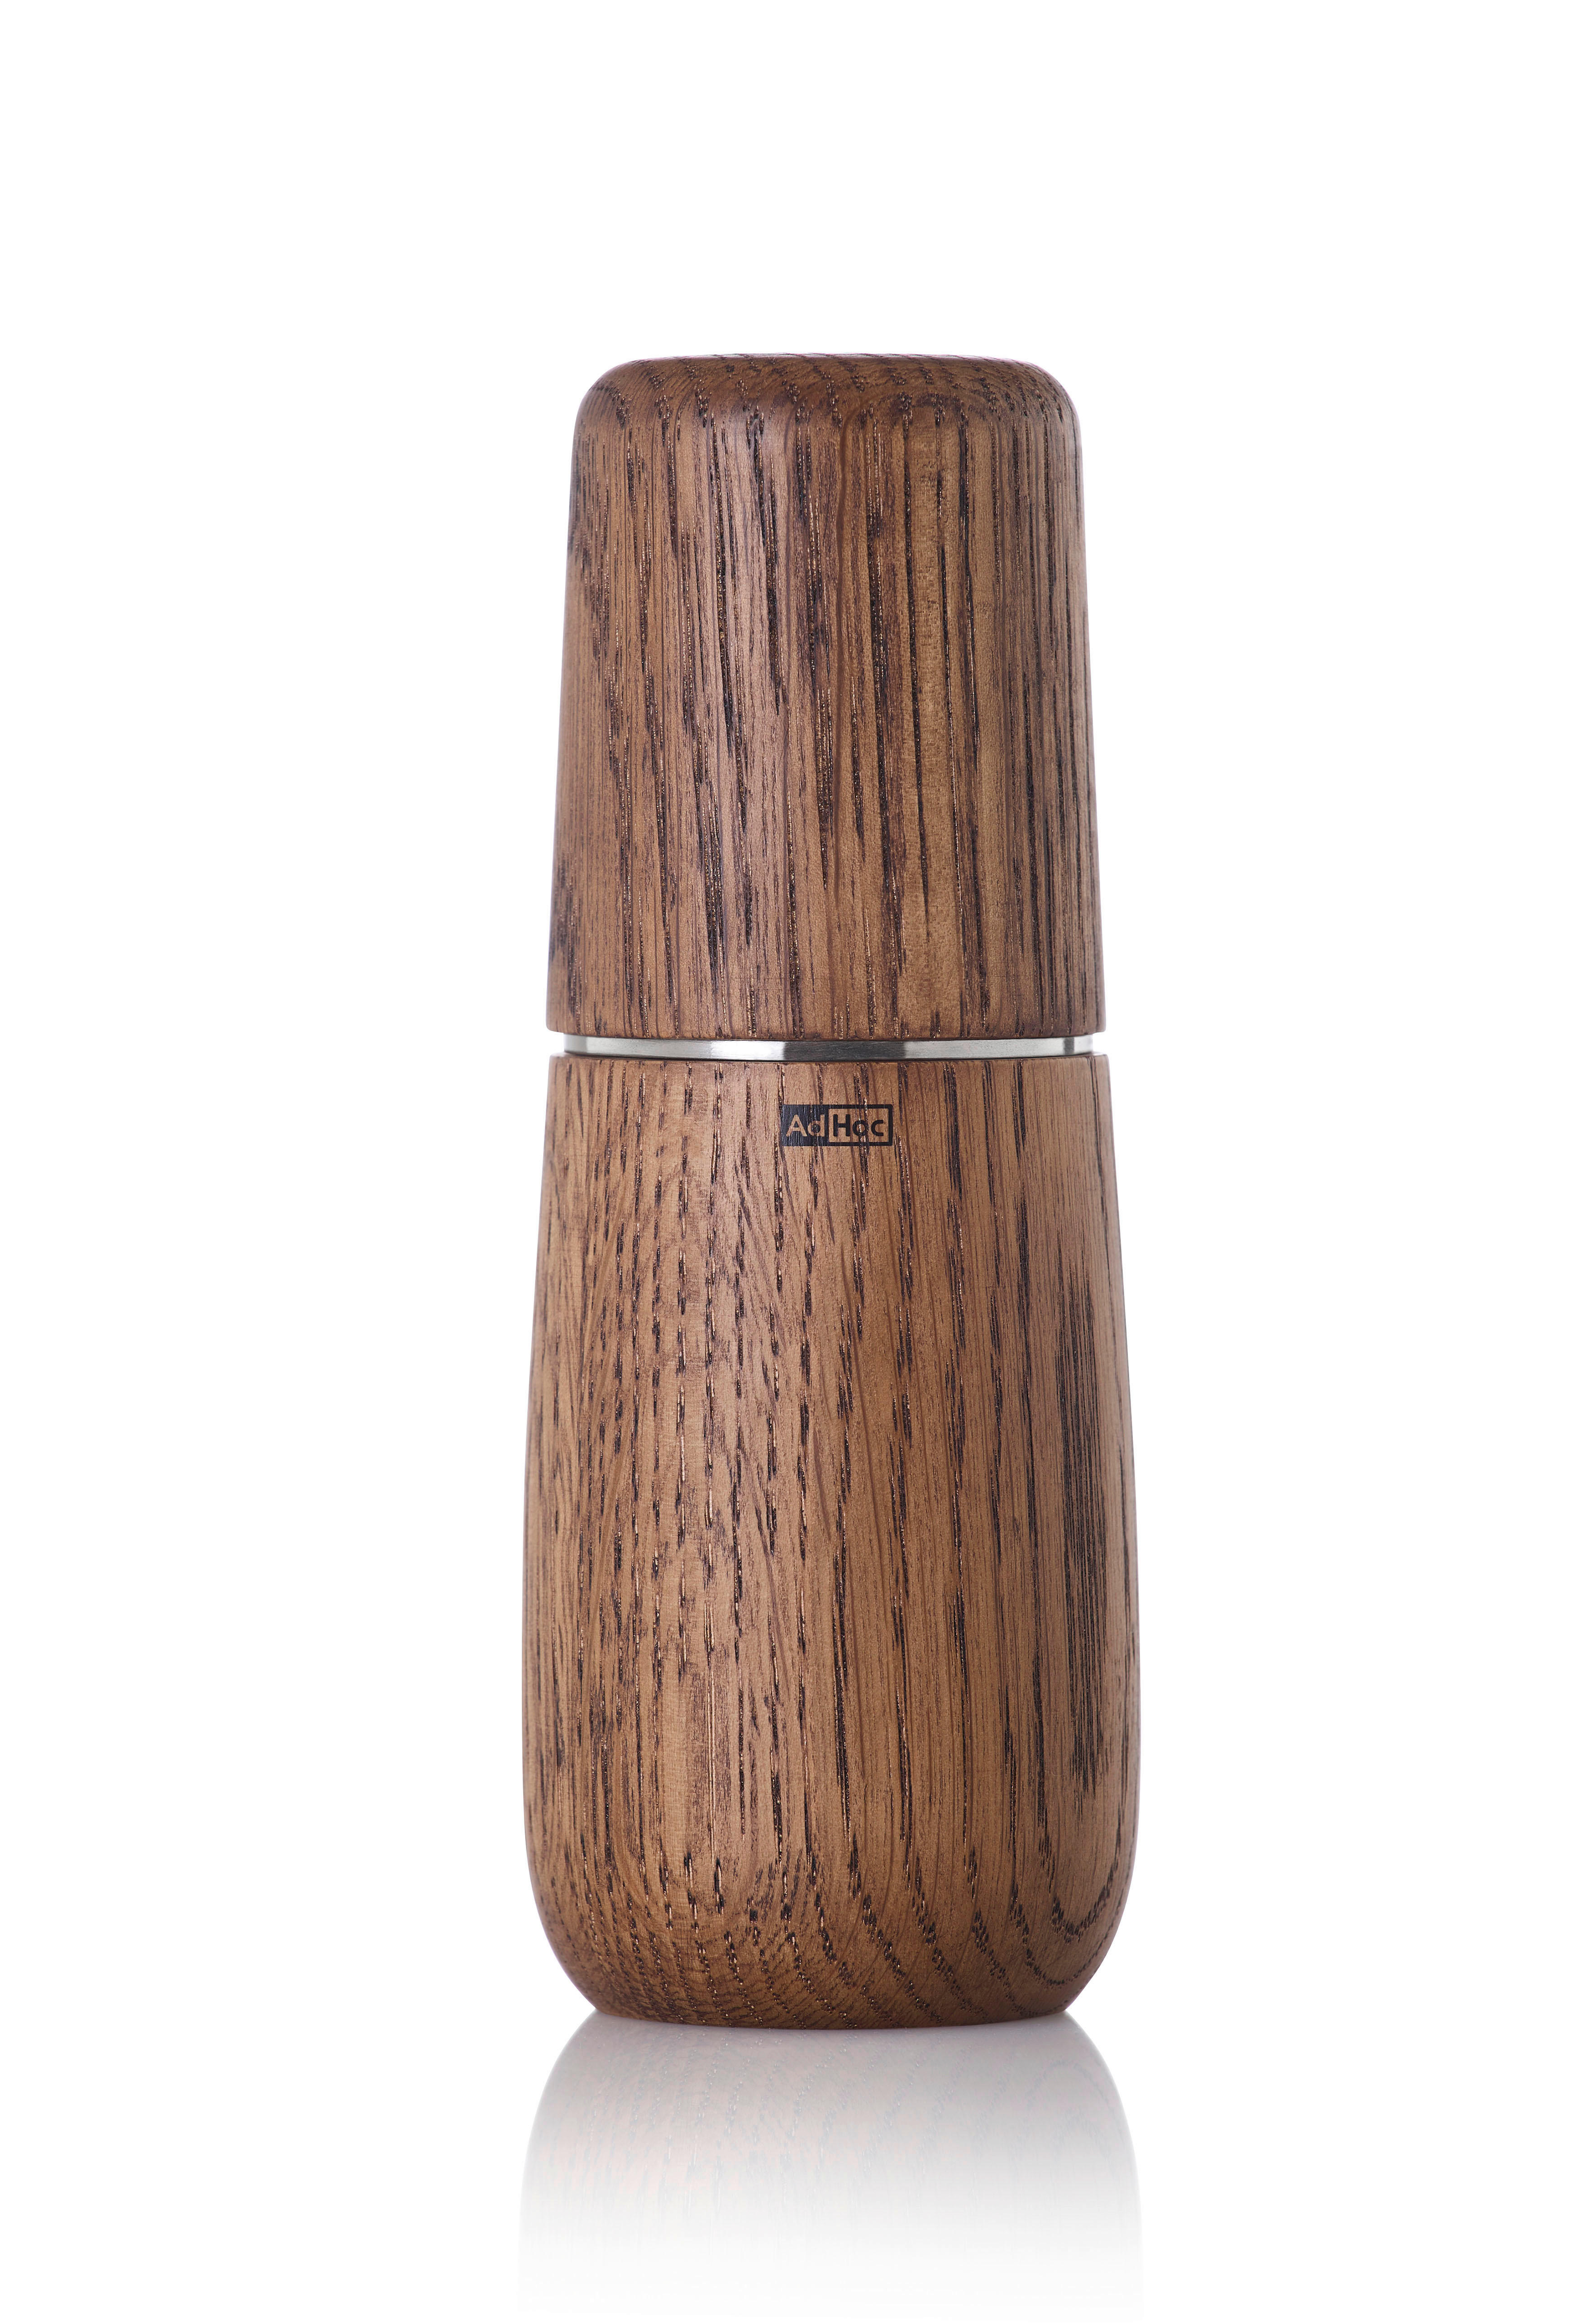 PFEFFERMÜHLE - Eichefarben, Basics, Holz/Keramik (7/18cm) - AdHoc